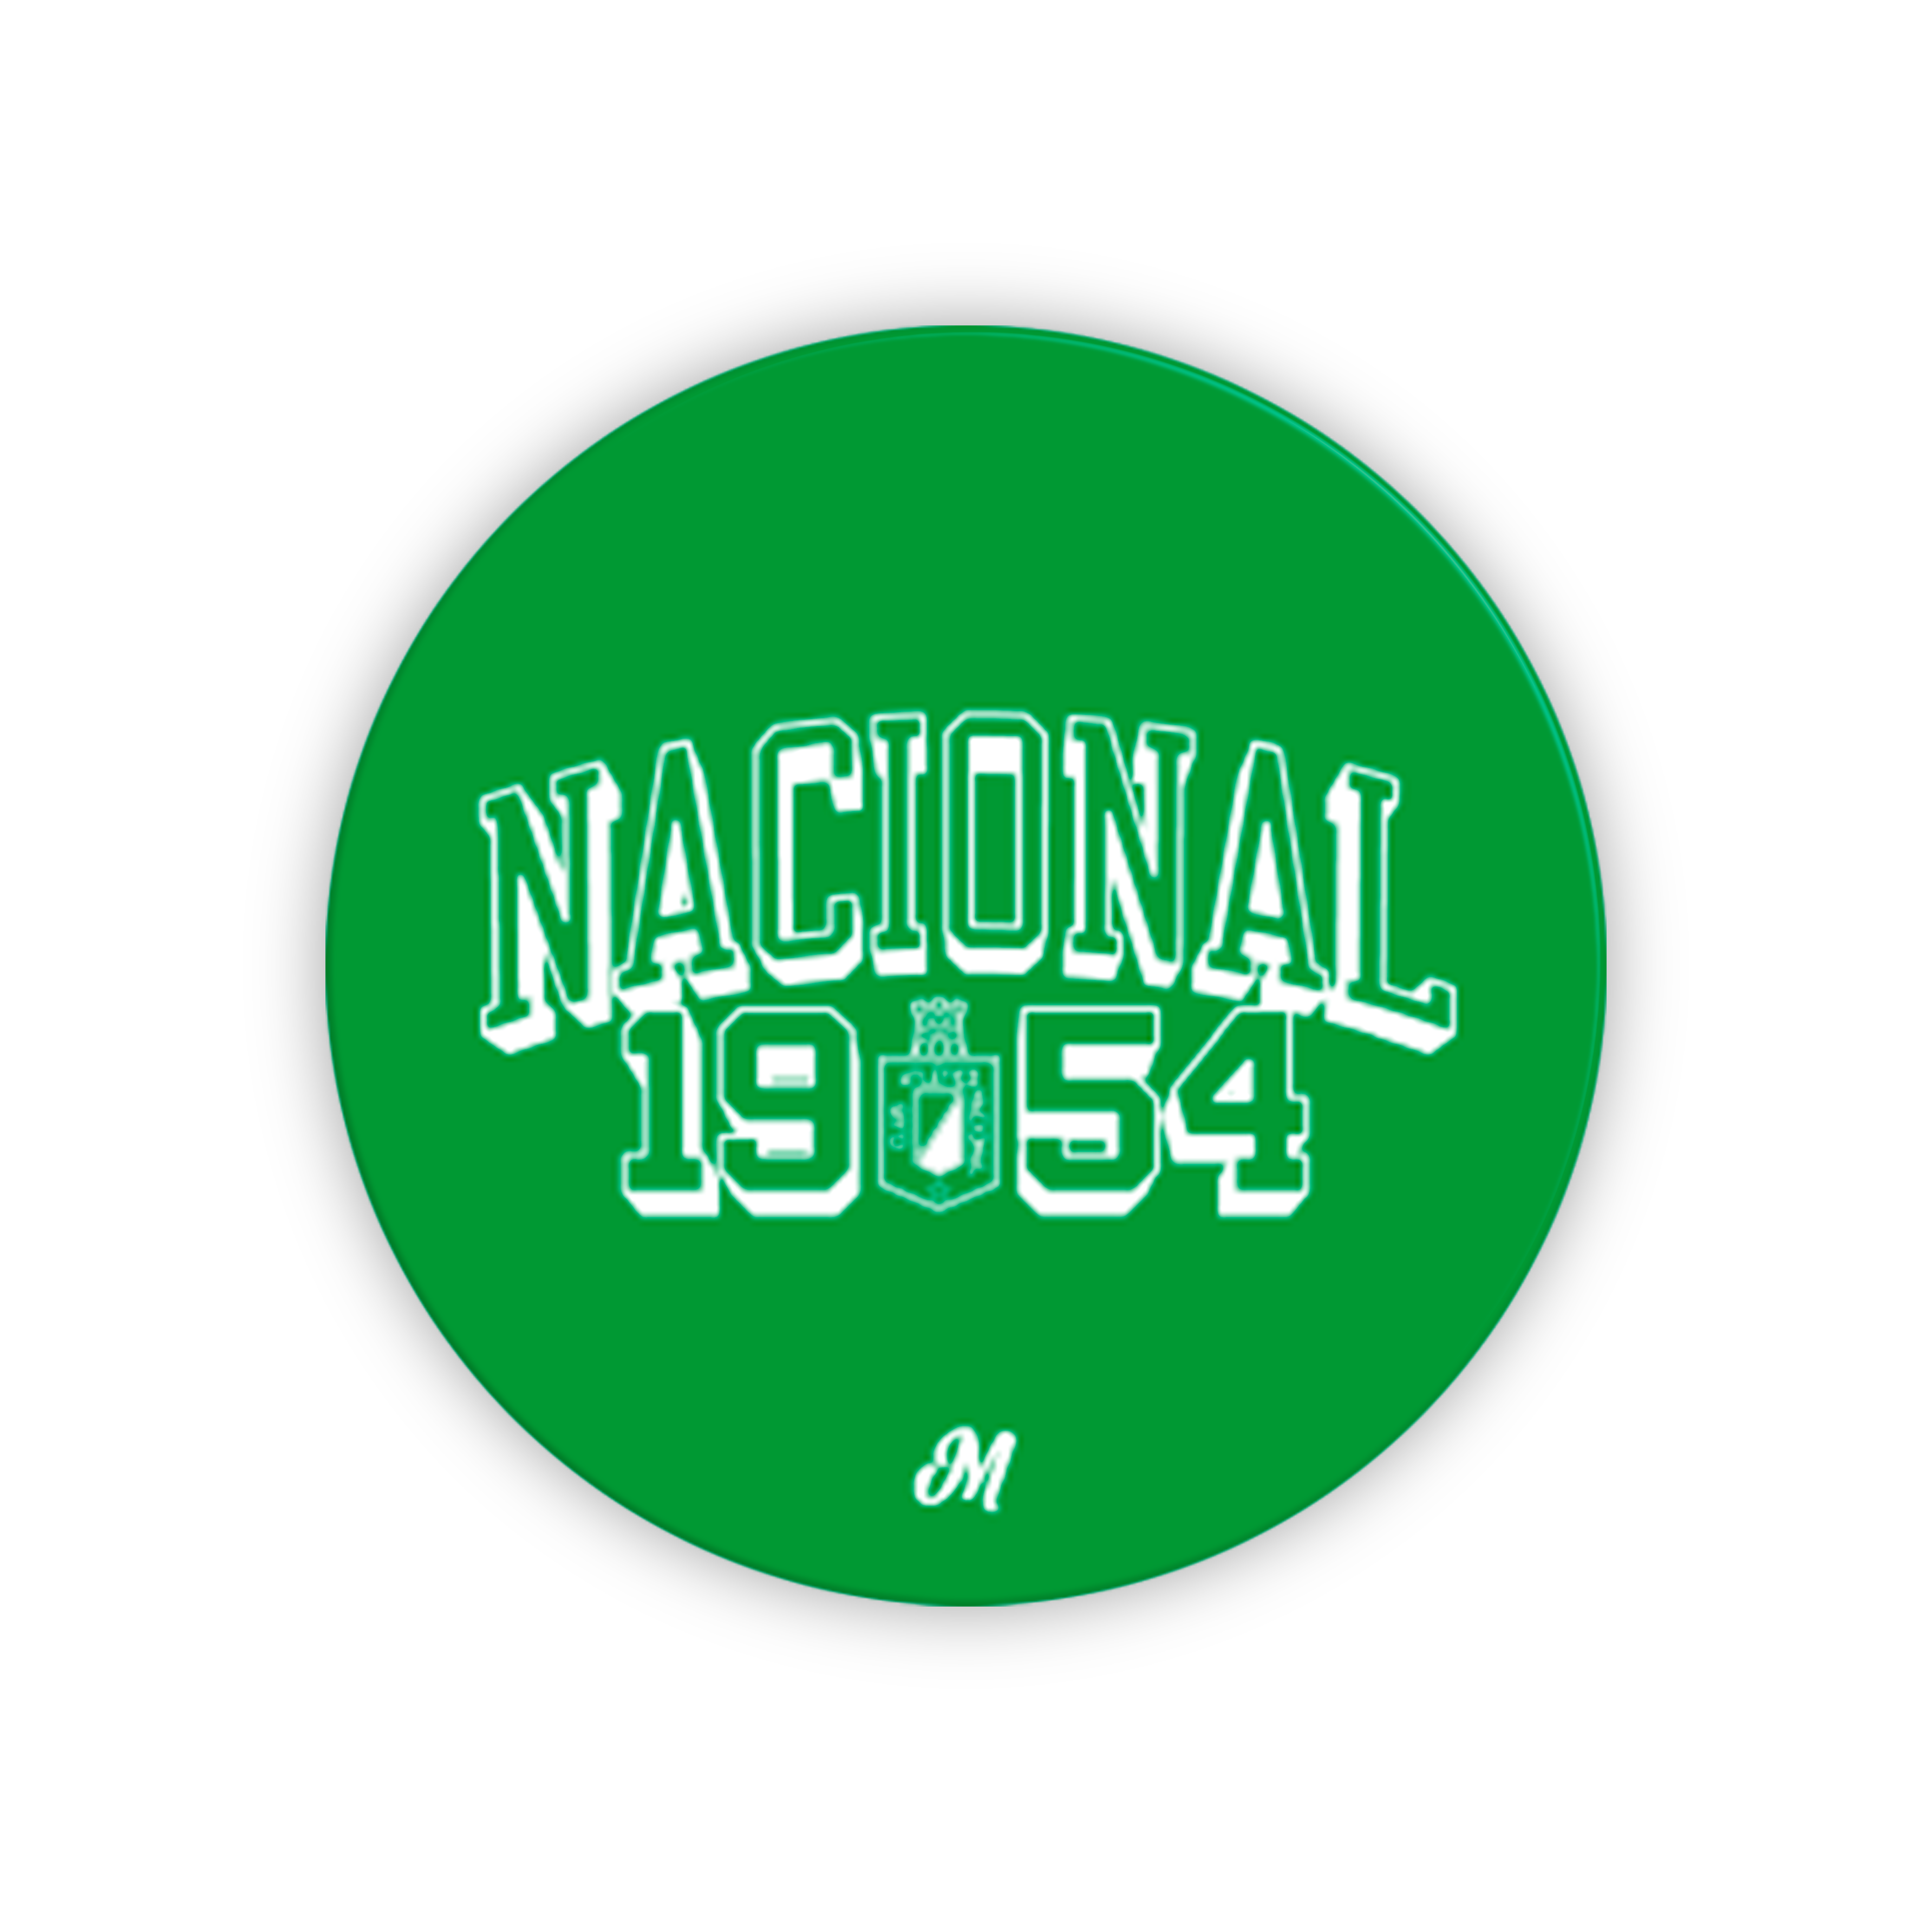 Nacional 1954 Phone holder - Mandala Cases 